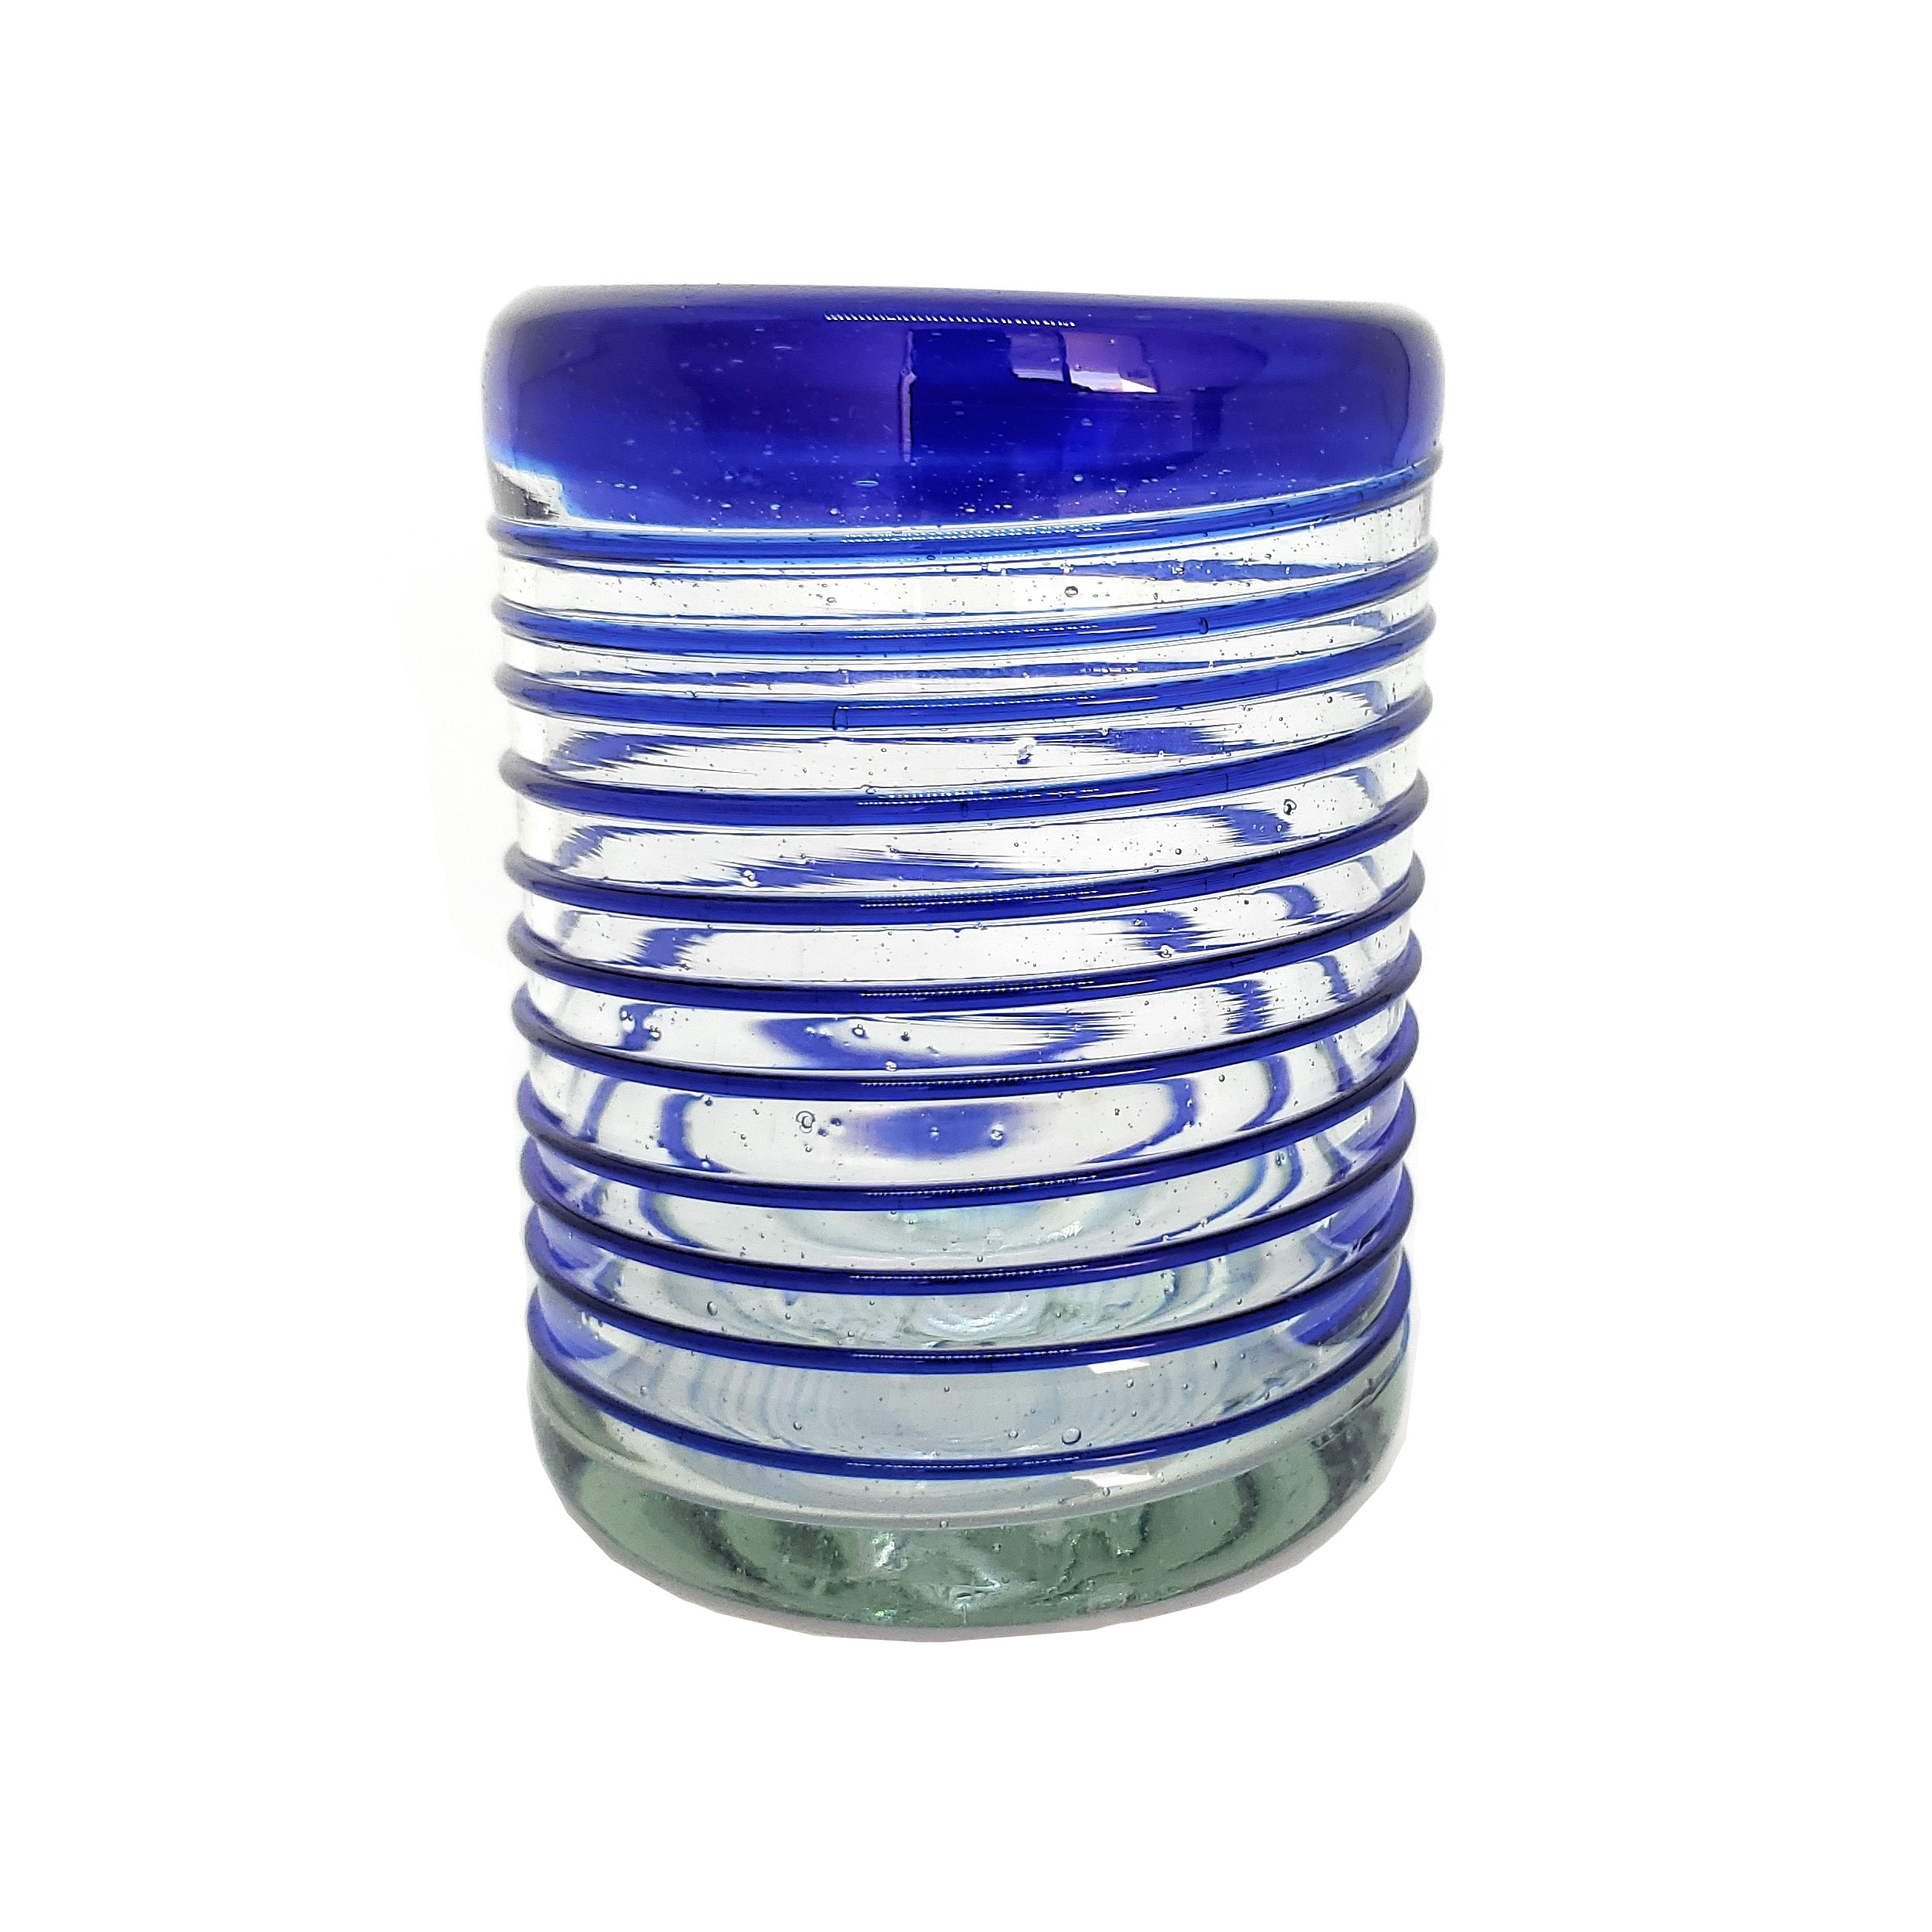 Ofertas / Juego de 6 vasos chicos con espiral azul cobalto / Éste festivo juego de vasos es ideal para tomar leche con galletas o beber limonada en un día caluroso.